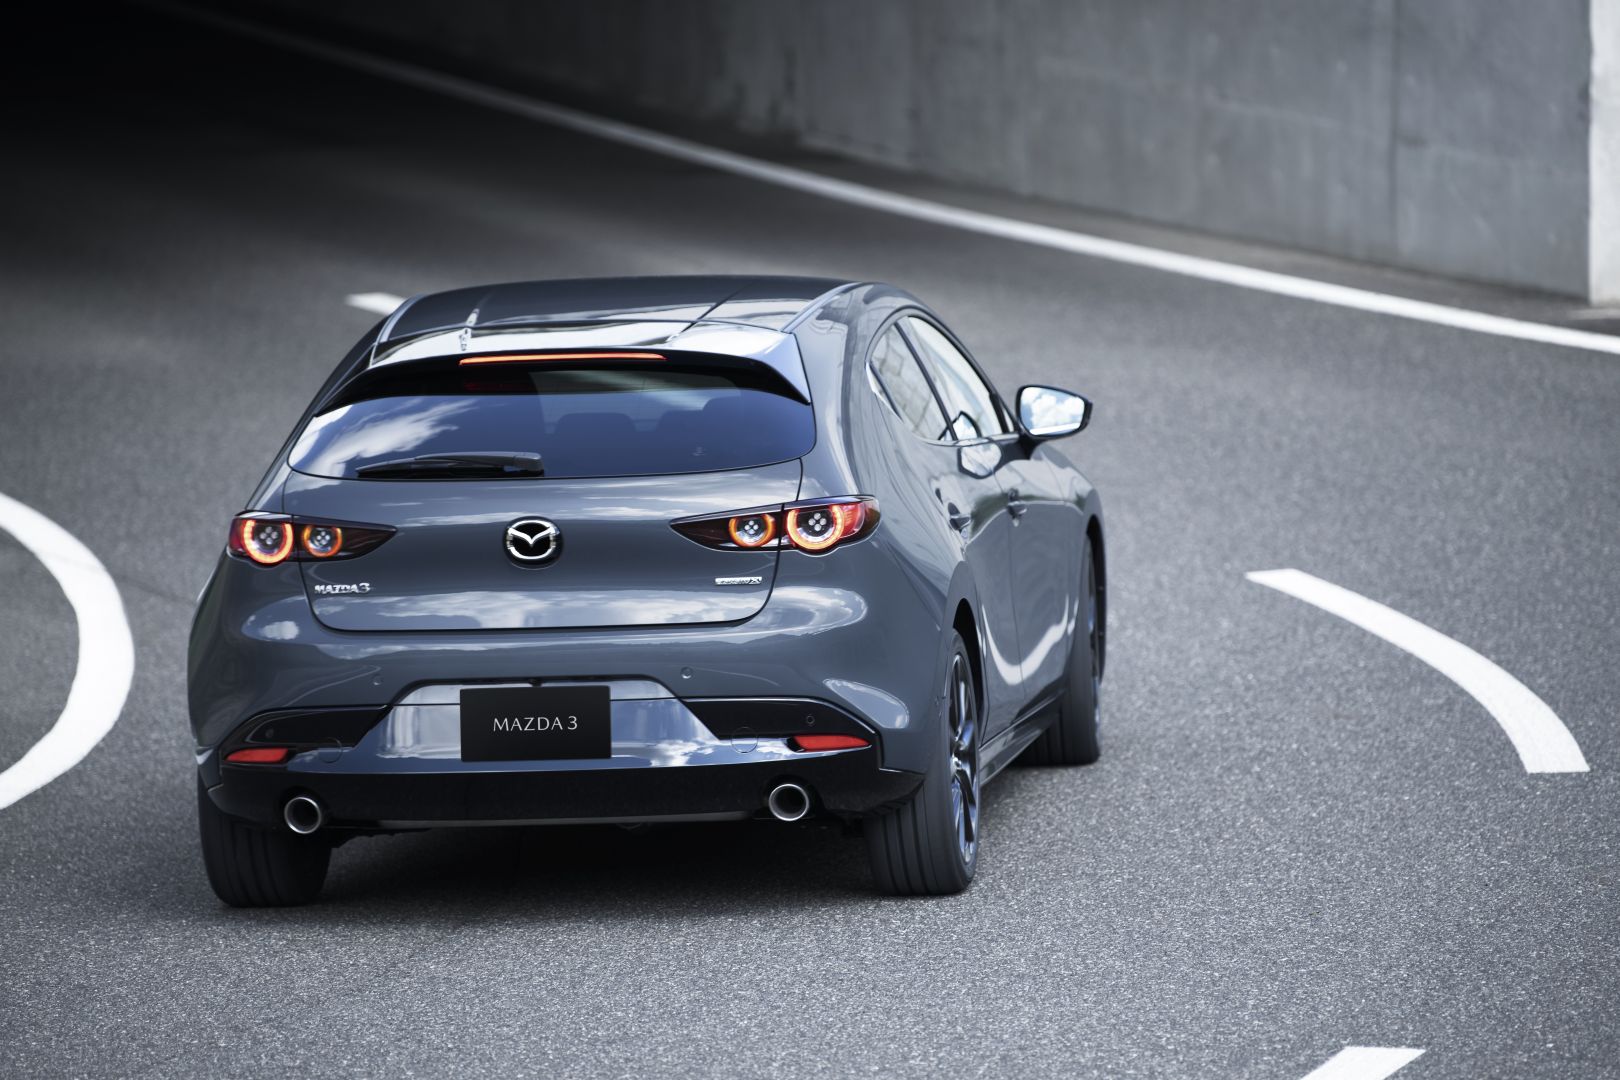 File:2019 Mazda3 Hatchback 2.0 BP (20191219) 01.jpg - Wikipedia